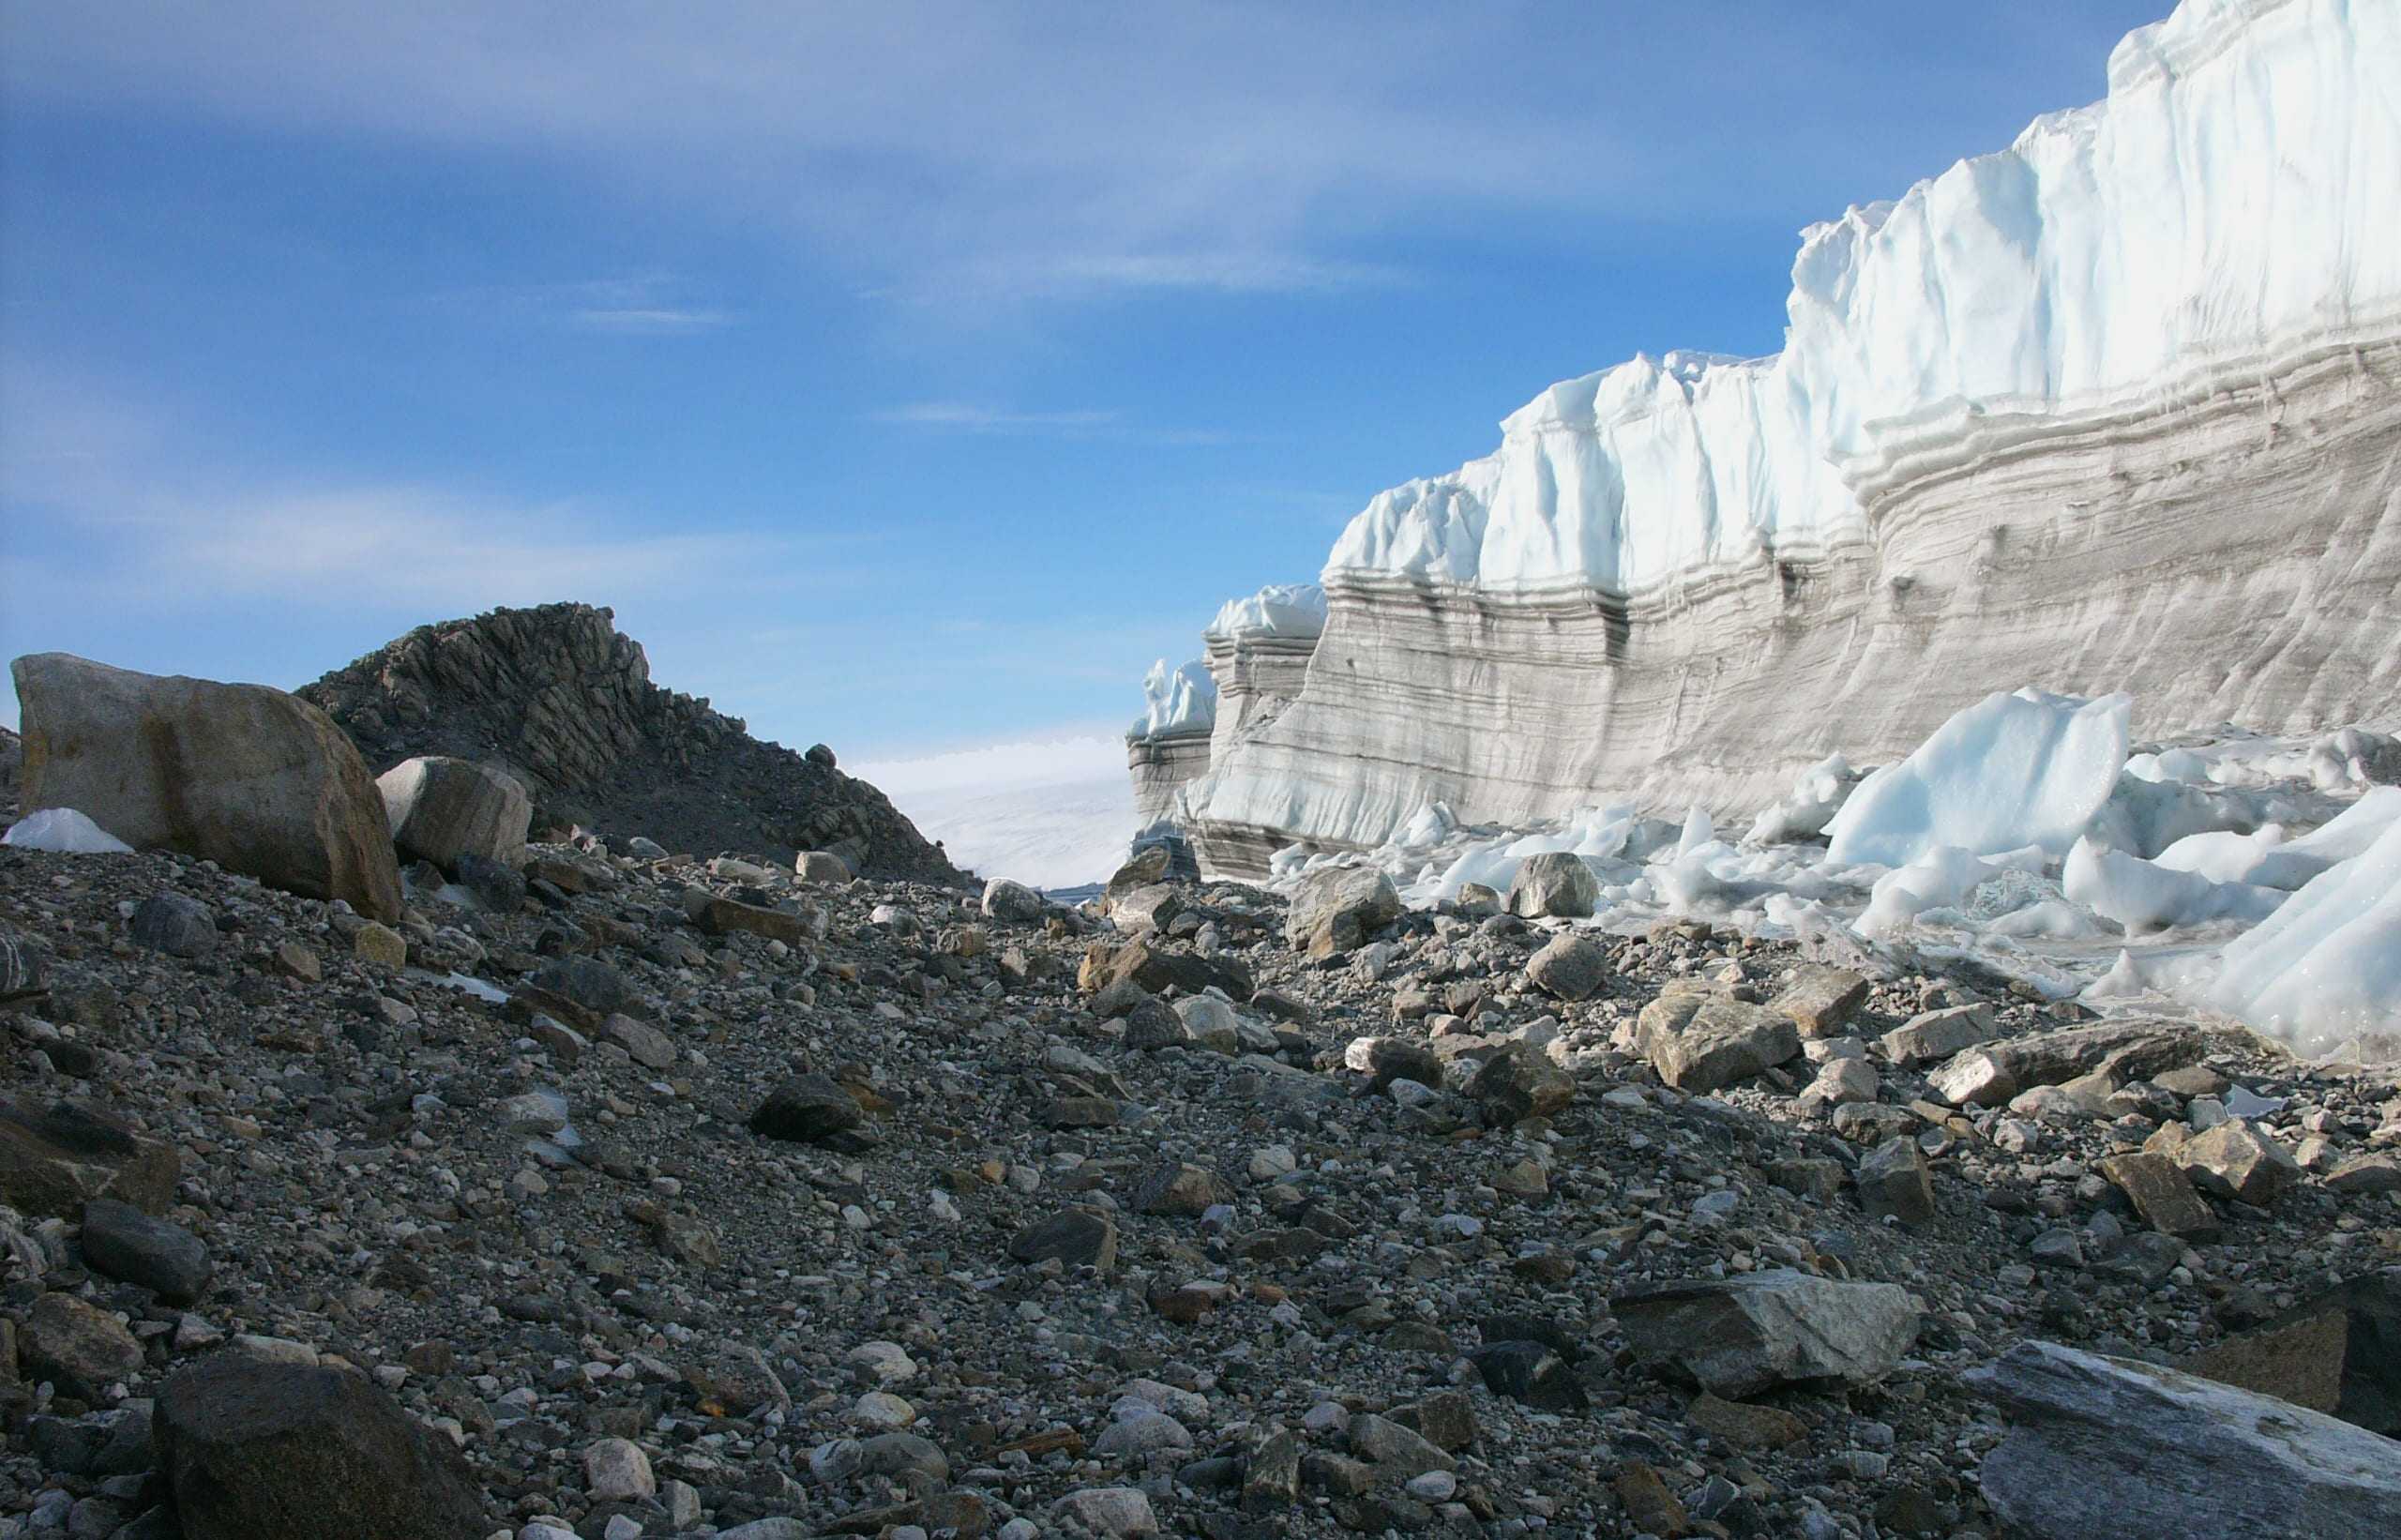 Edge of the Antarctic ice sheet on Mather Island, Prydz Bay, Antarctica.